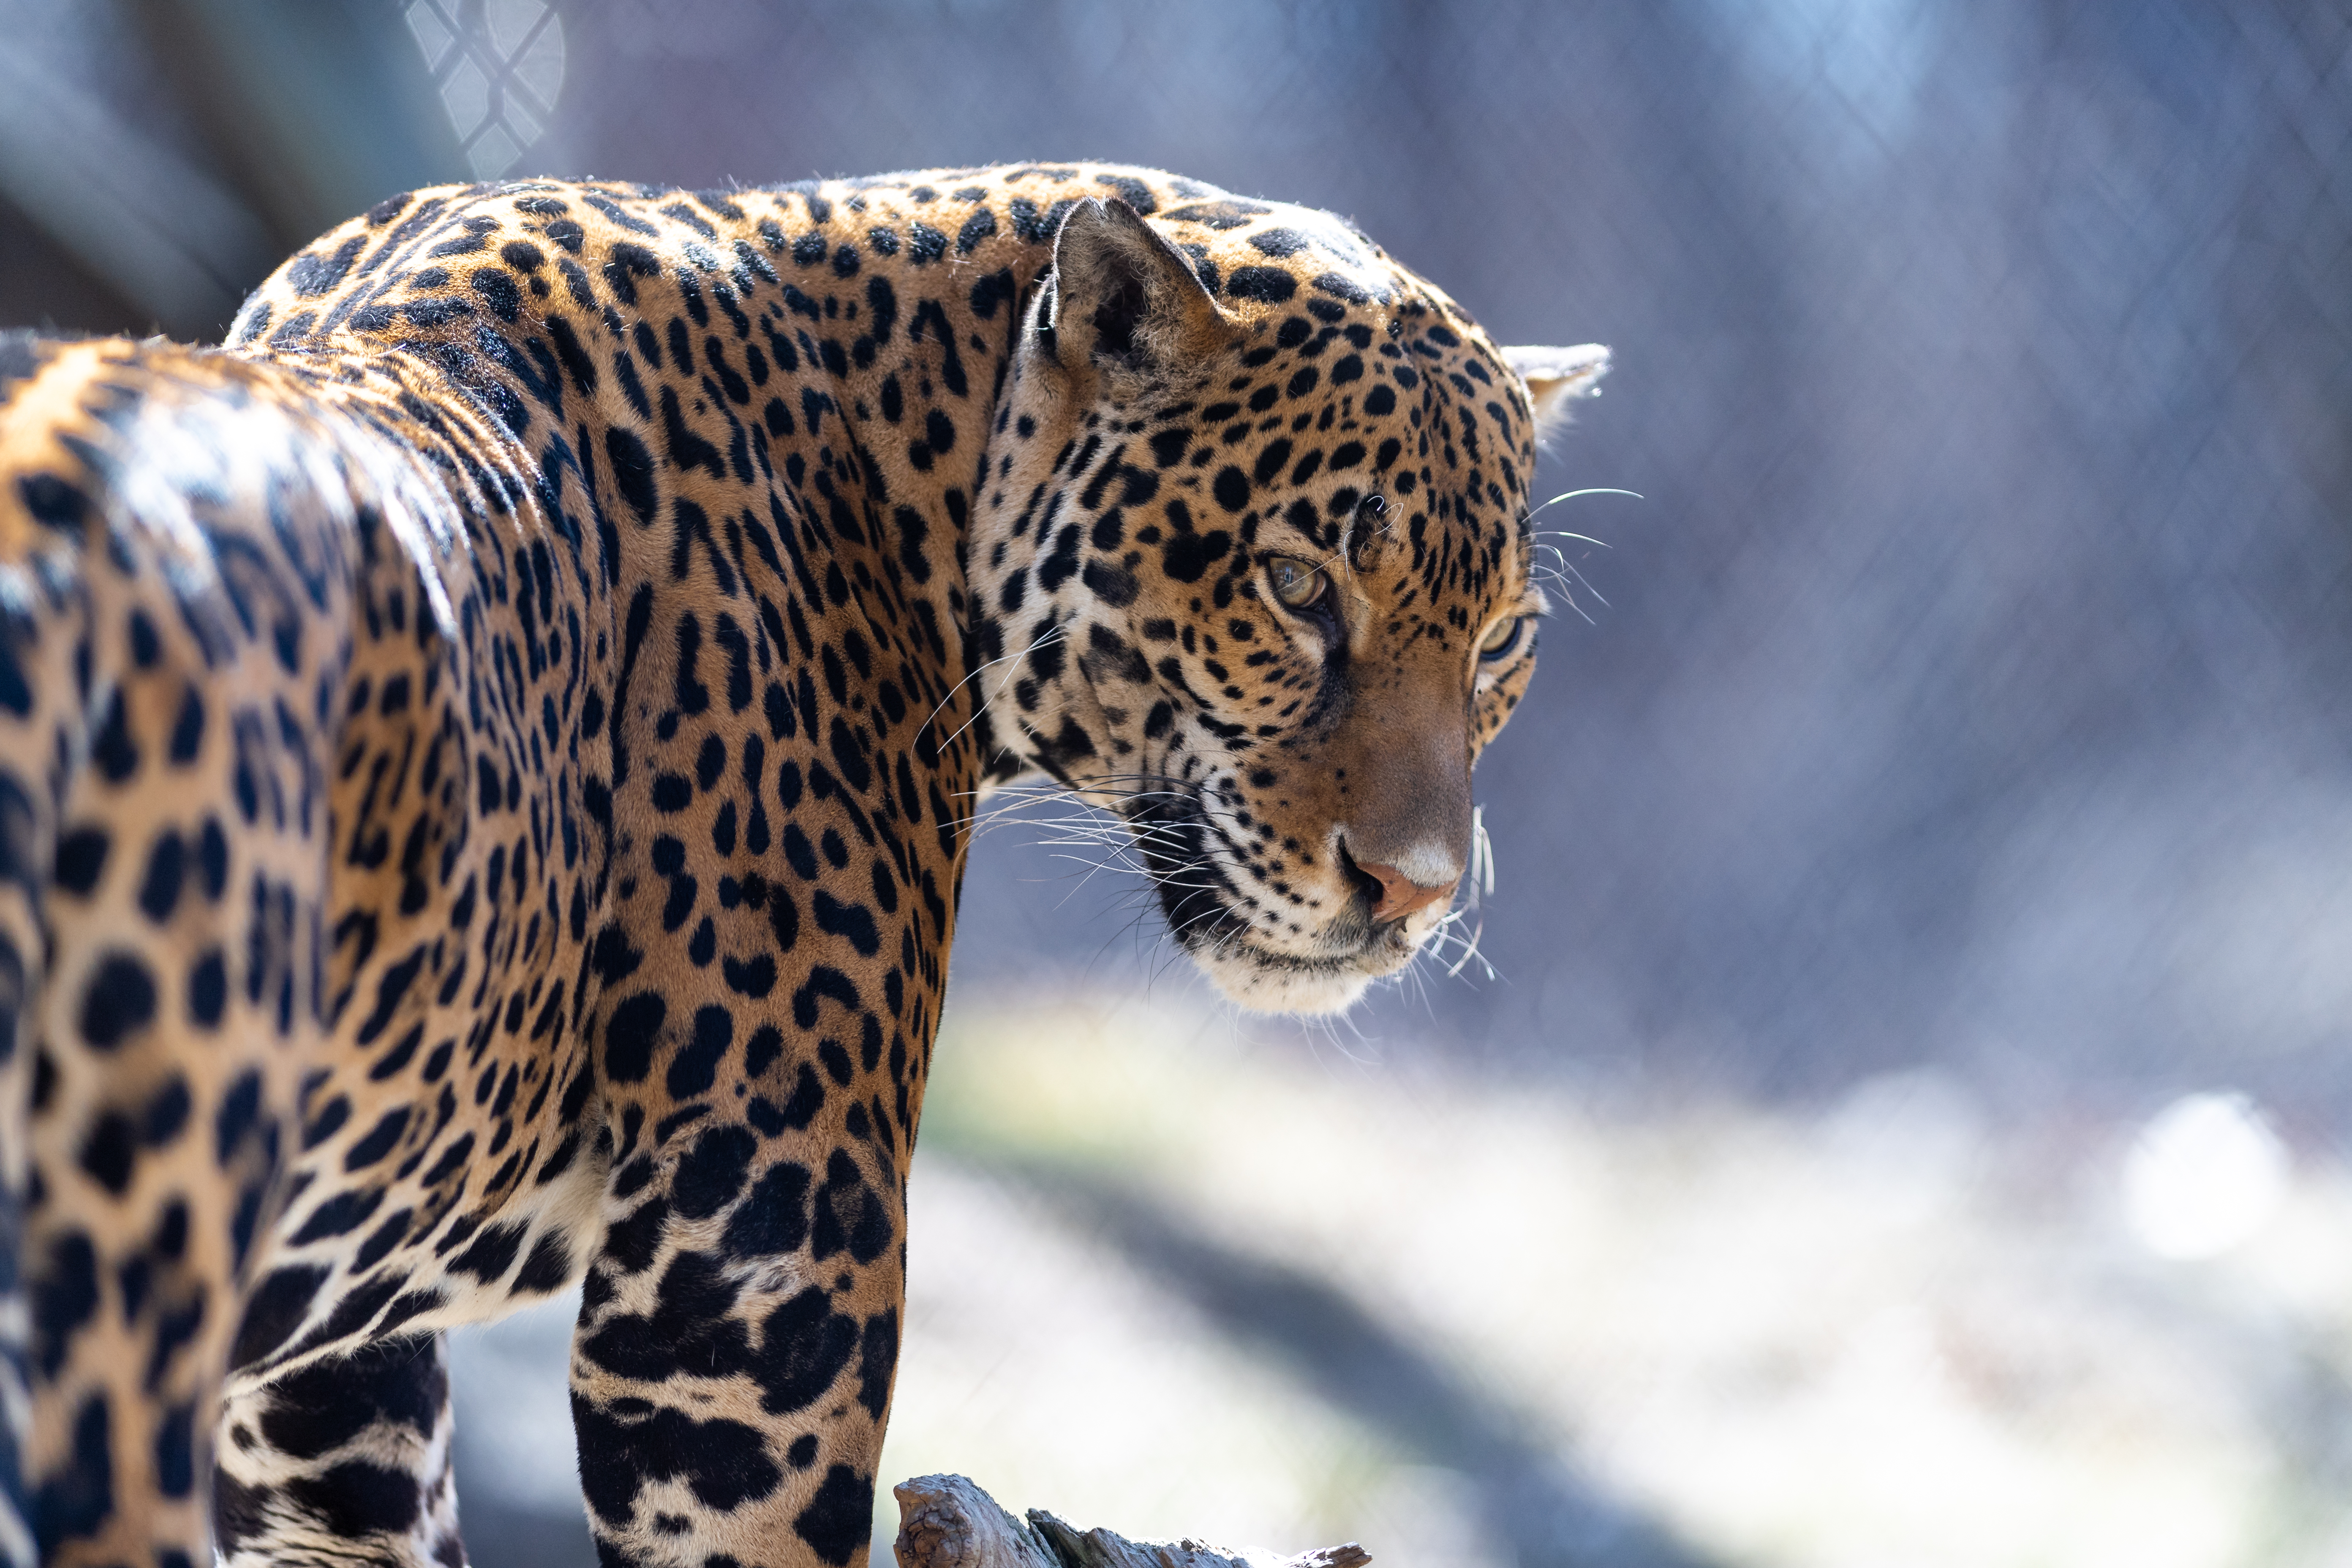 1080p pic sight, opinion, jaguar, animals